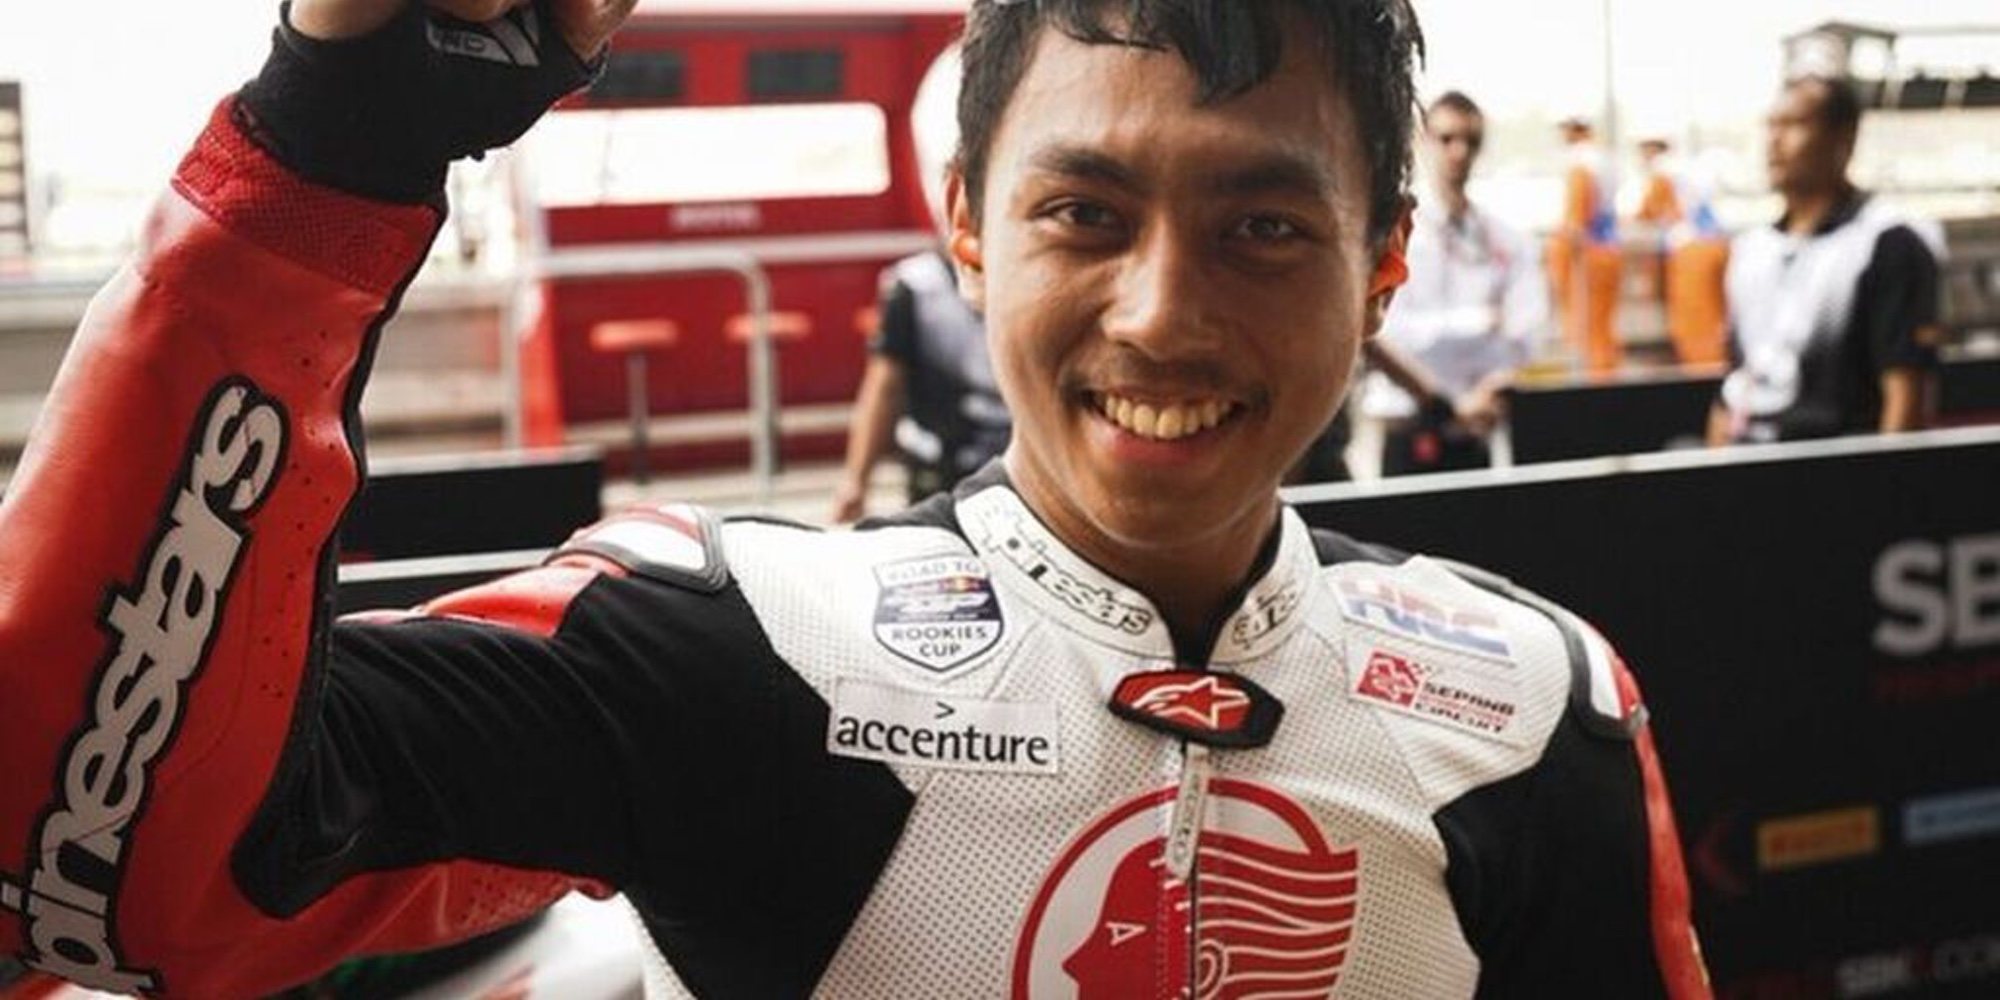 Muere el piloto indonesio Afridza Munandar tras una brutal caída durante una carrera